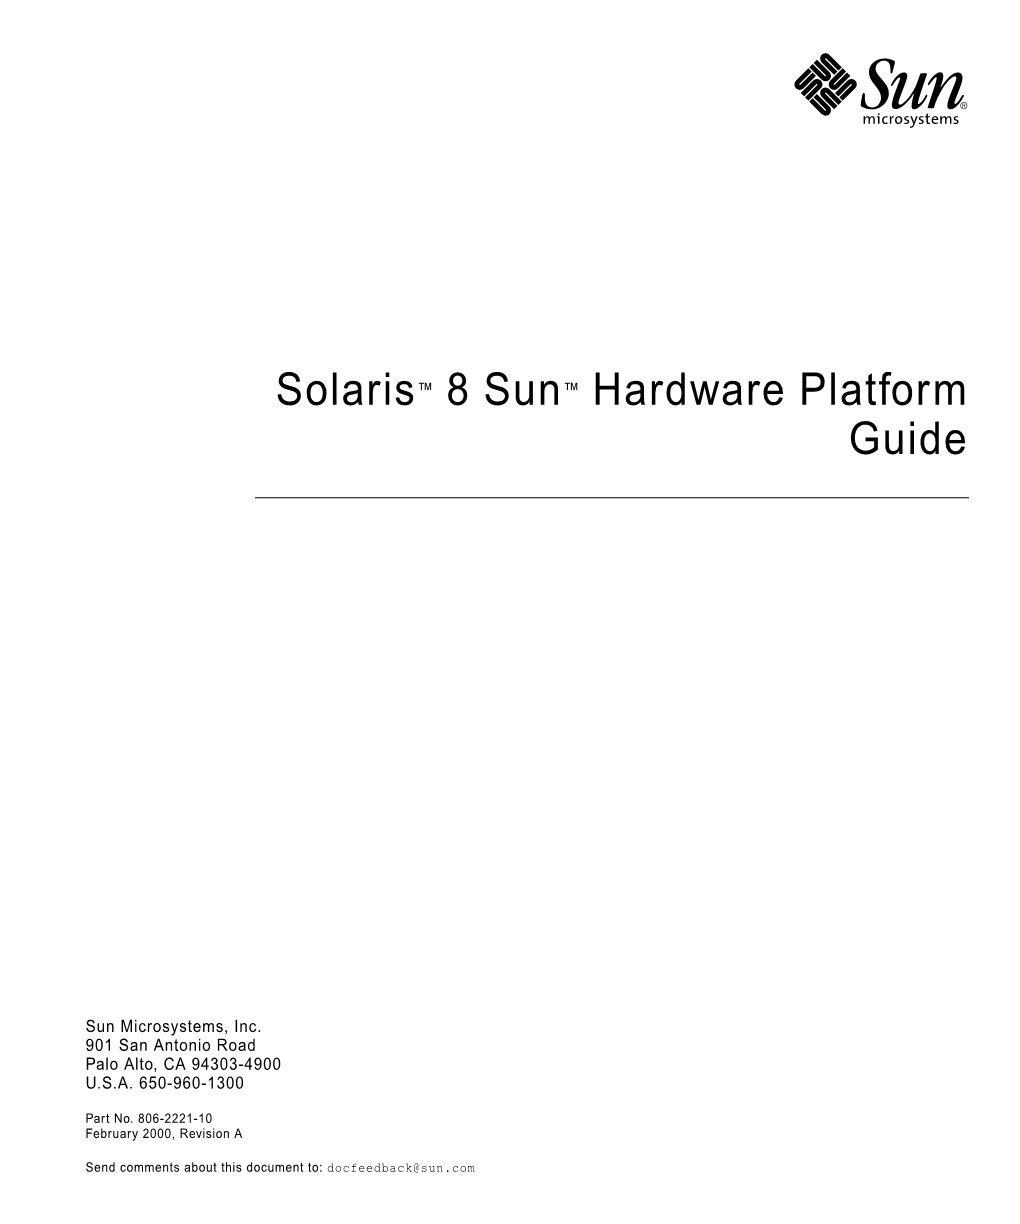 Solaris 8 Sun Hardware Platform Guide